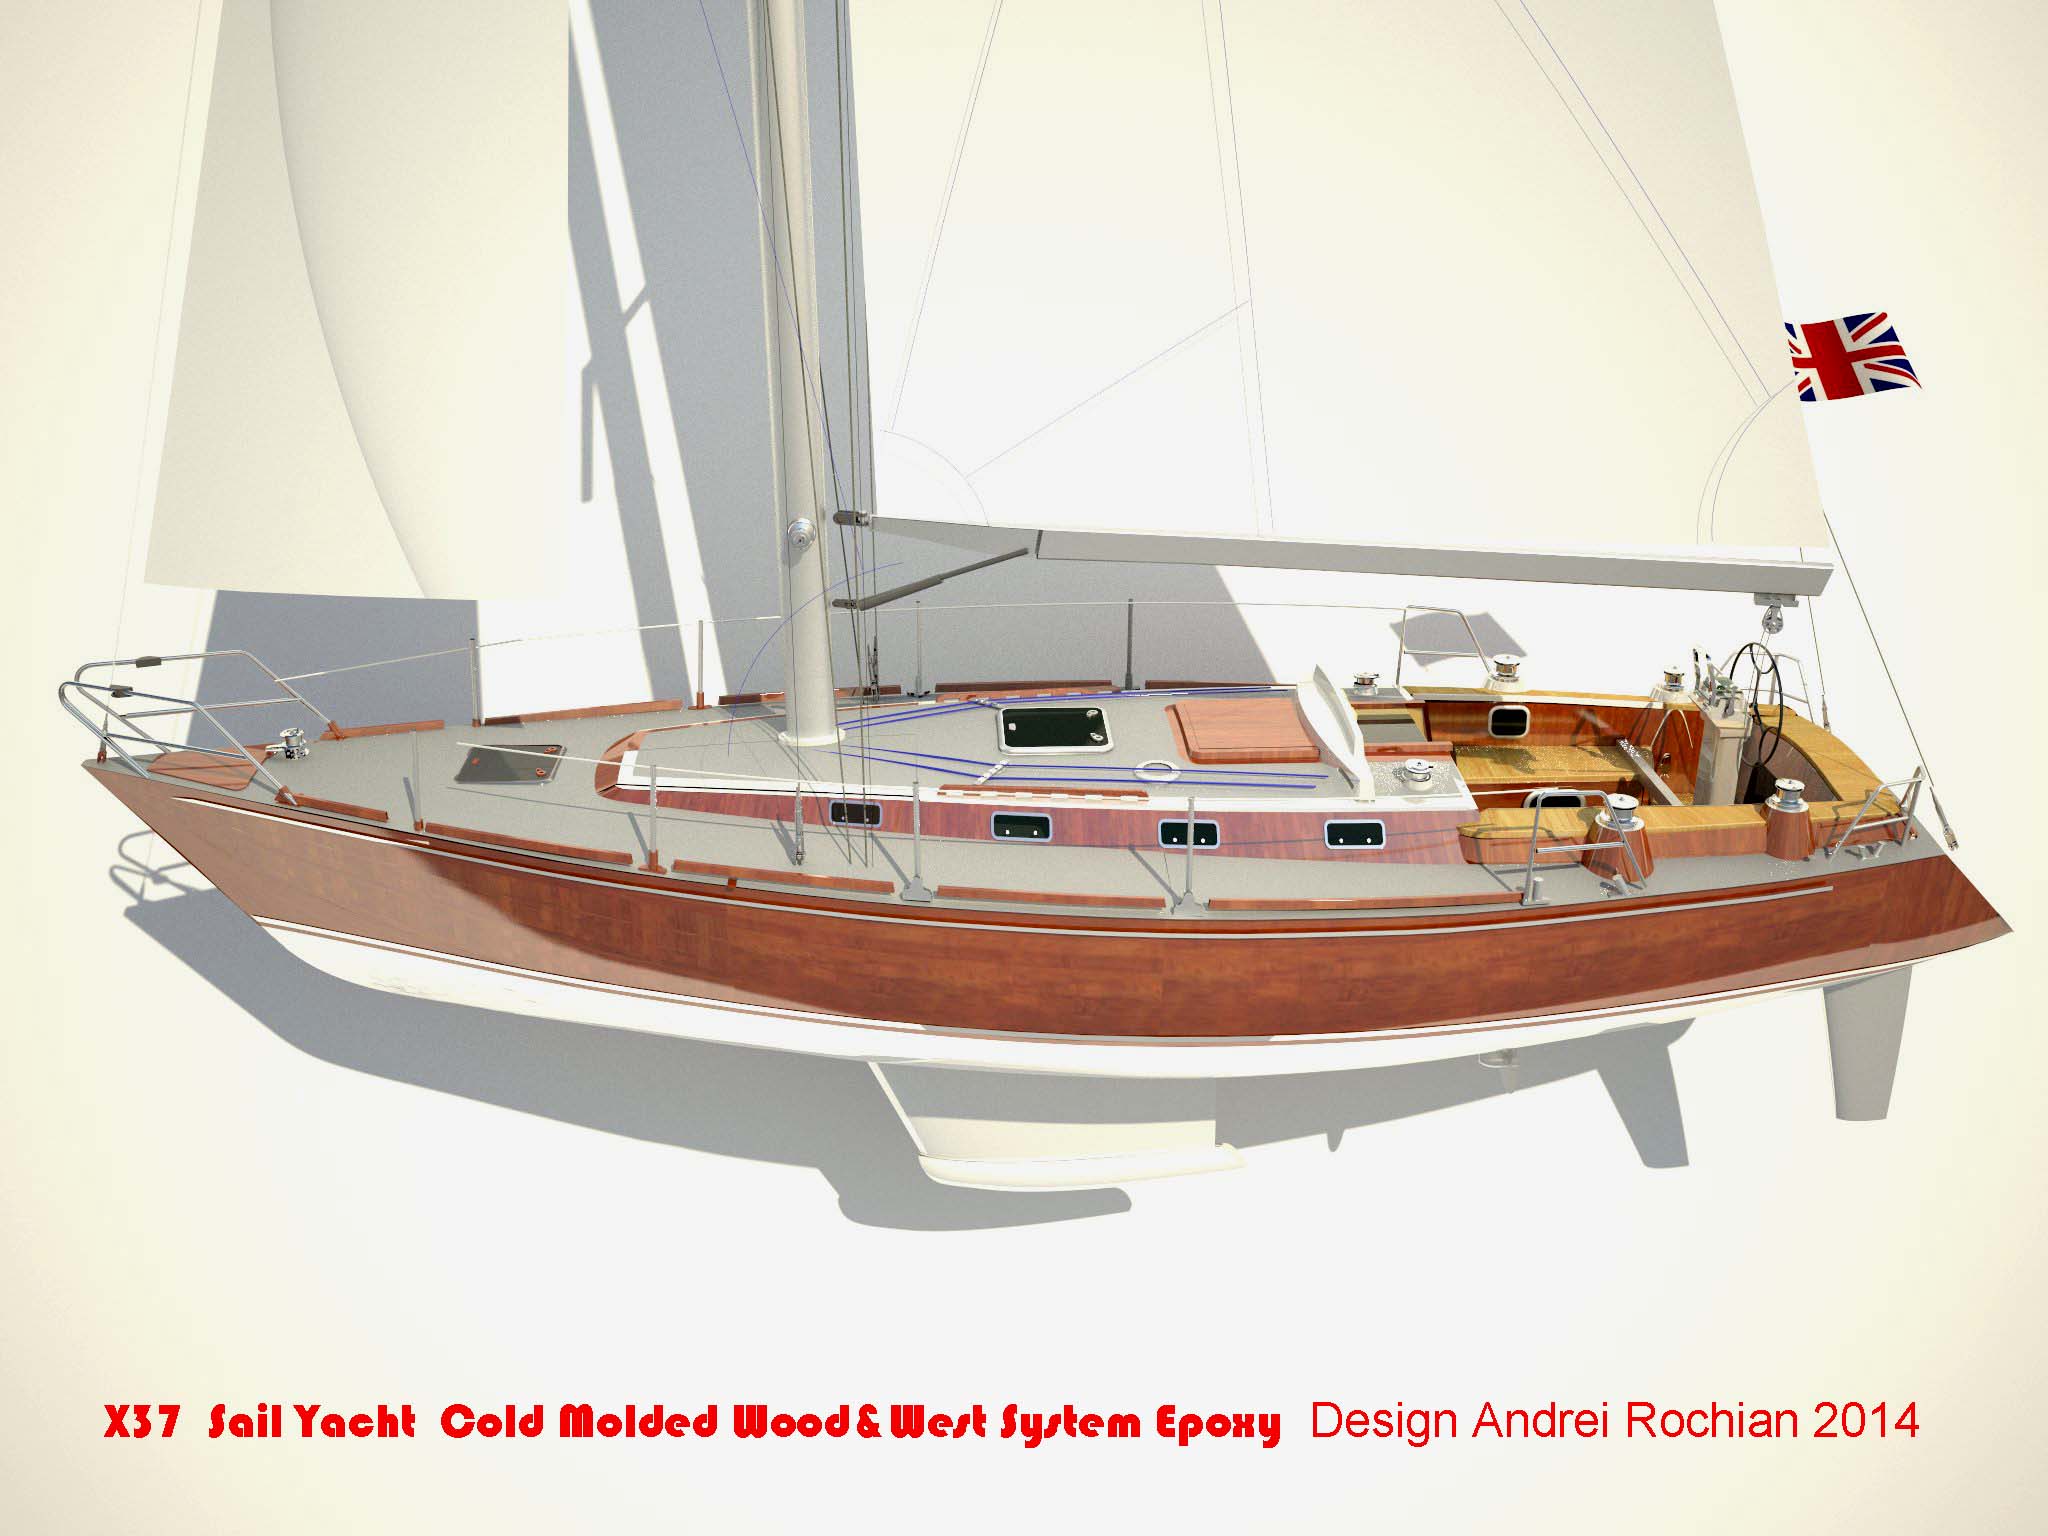 wood epoxy sailboat for sale